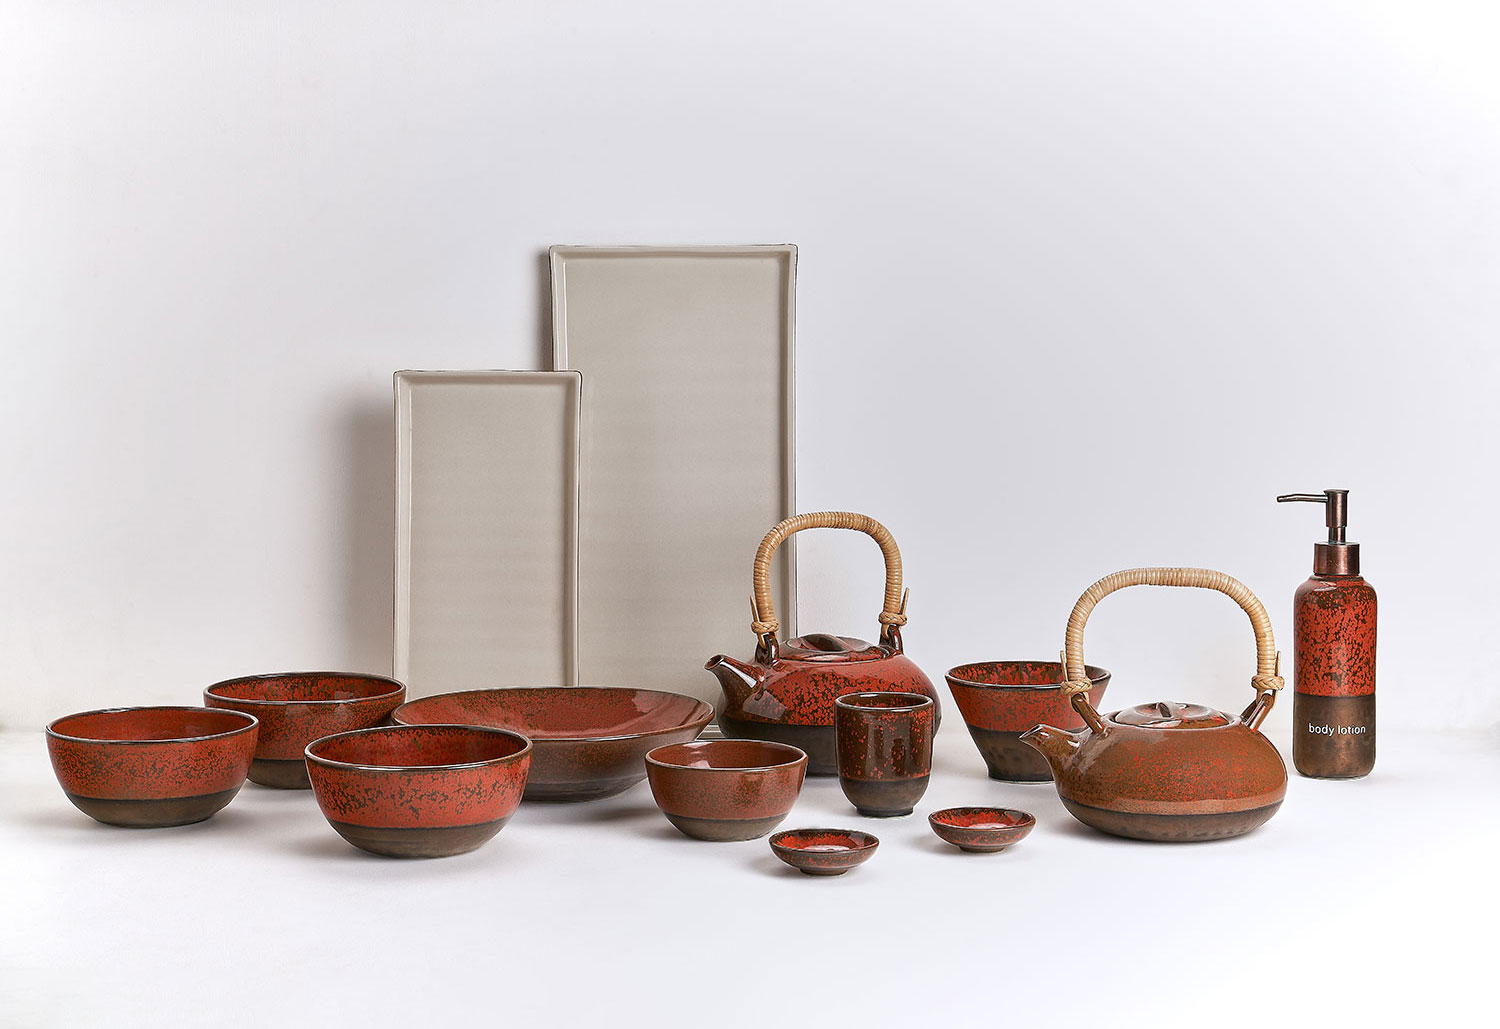 Kevala Ceramics in partnership with The Apurva Kempinski